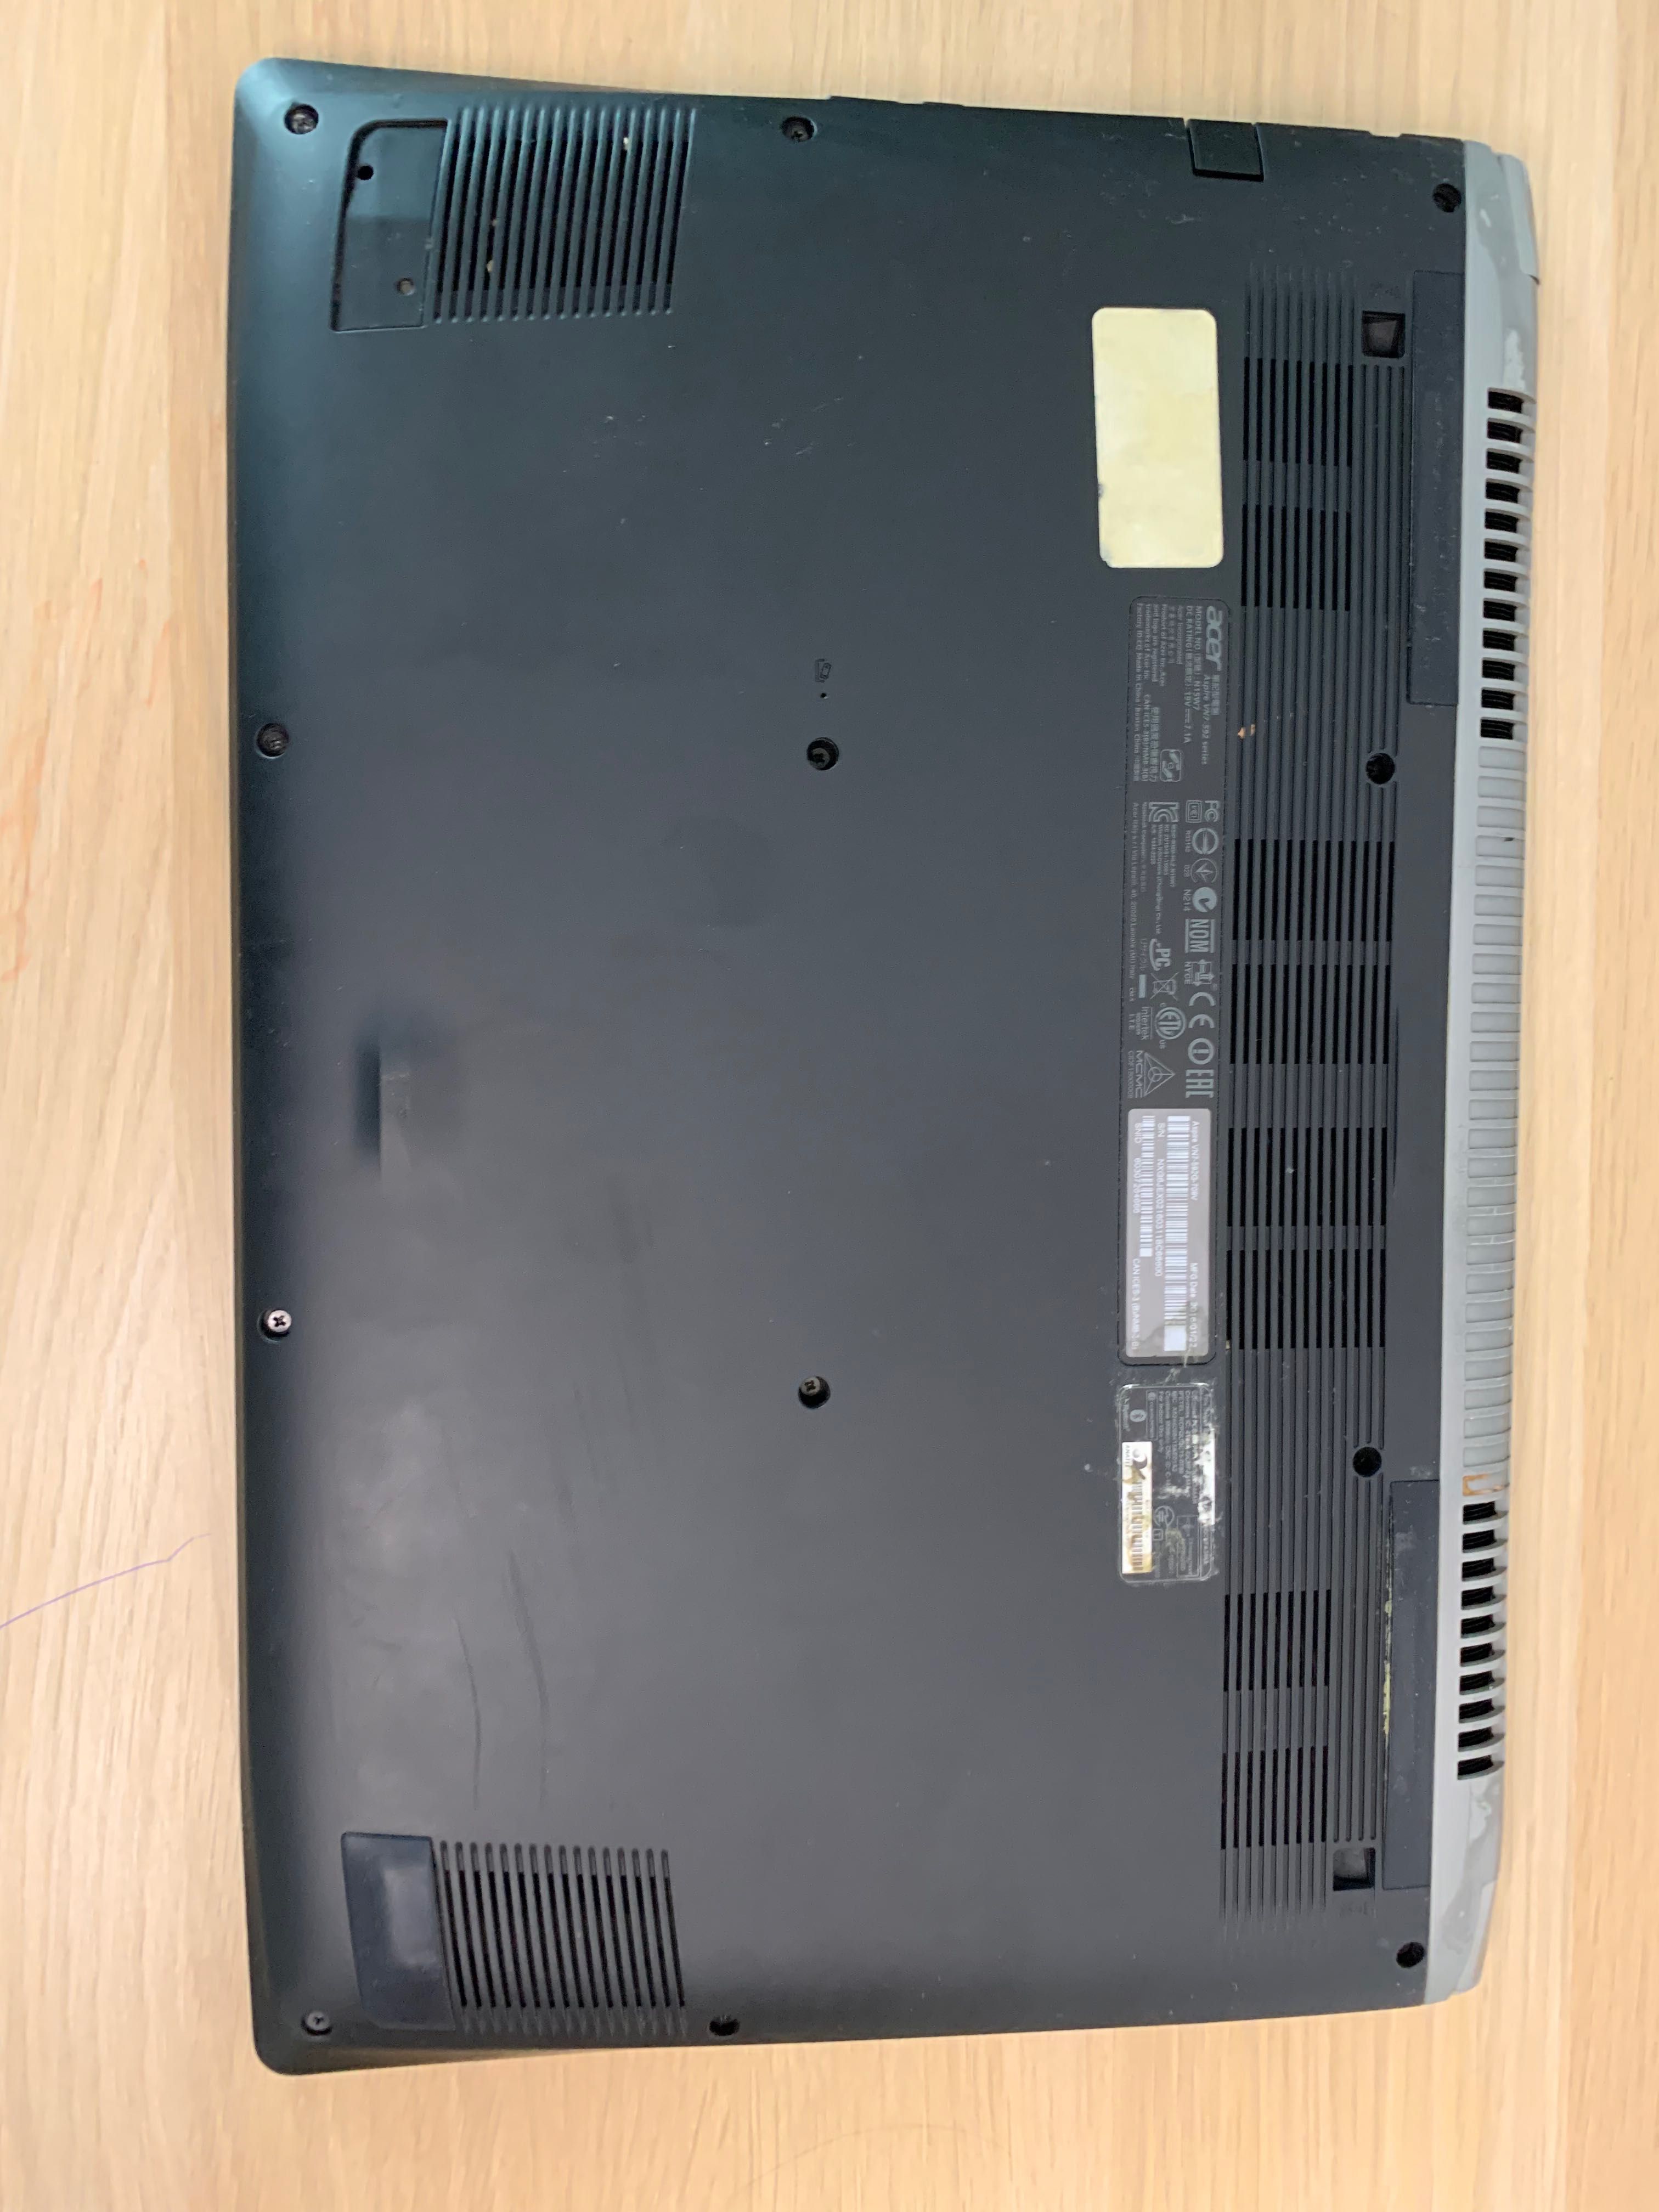 Laptop Acer Aspire V Nitro-Black Edition